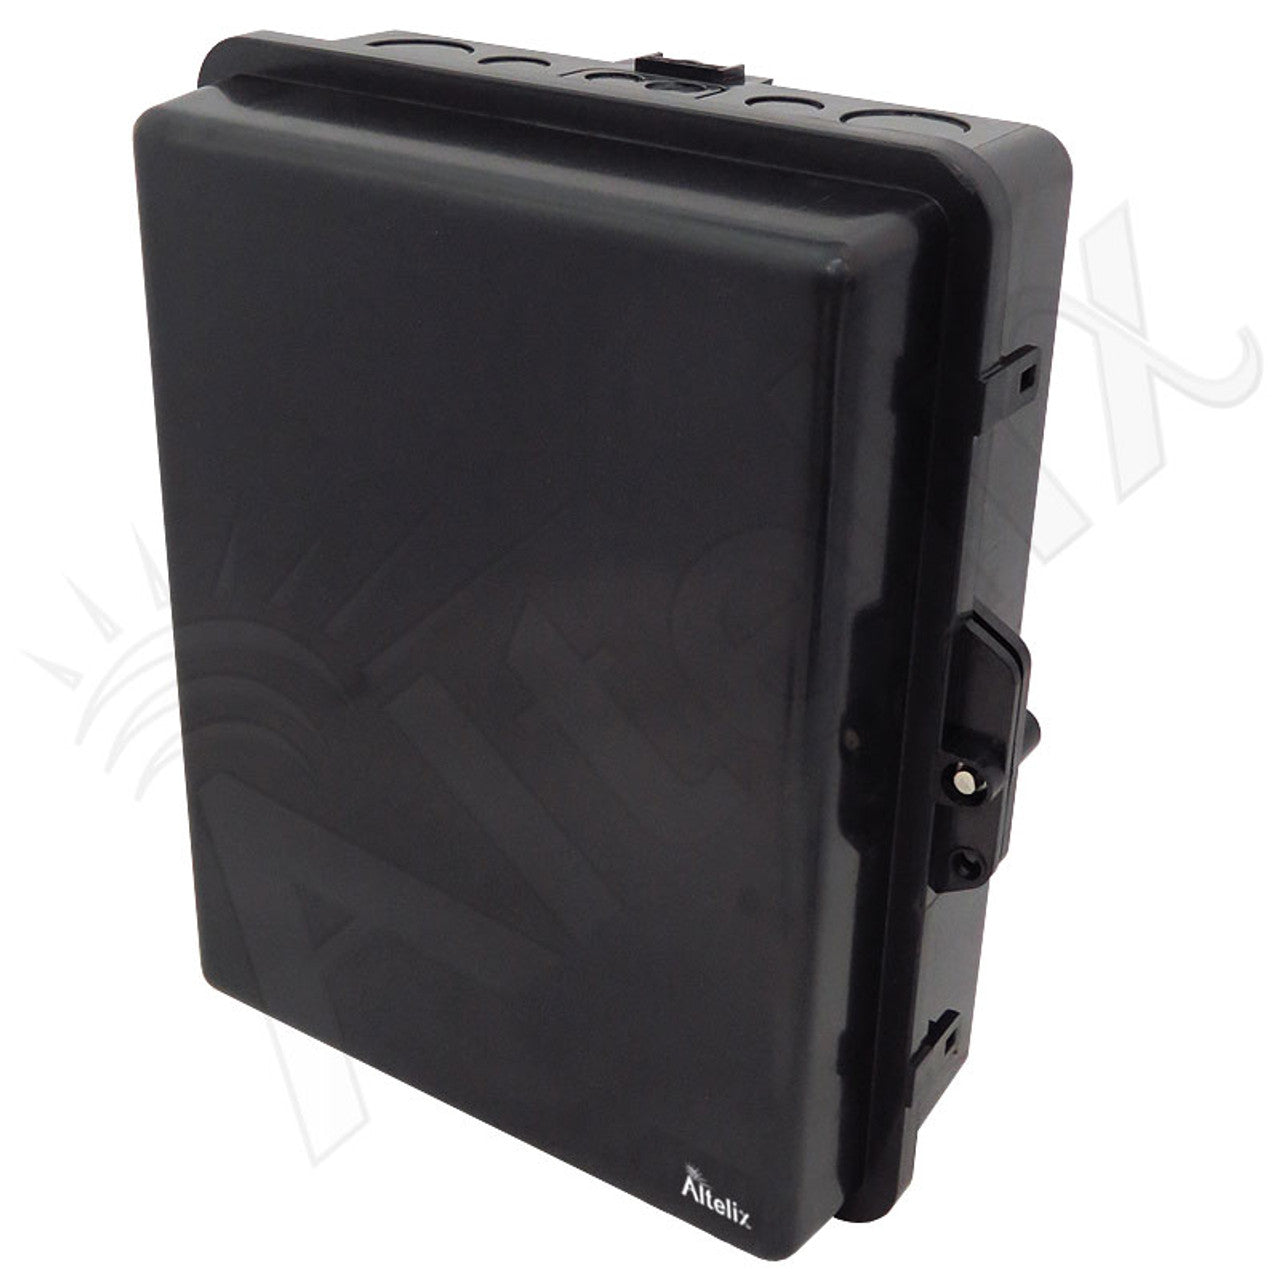 Altelix 14x11x5 PC + ABS Weatherproof Utility Box NEMA Enclosure with Hinged Door-2